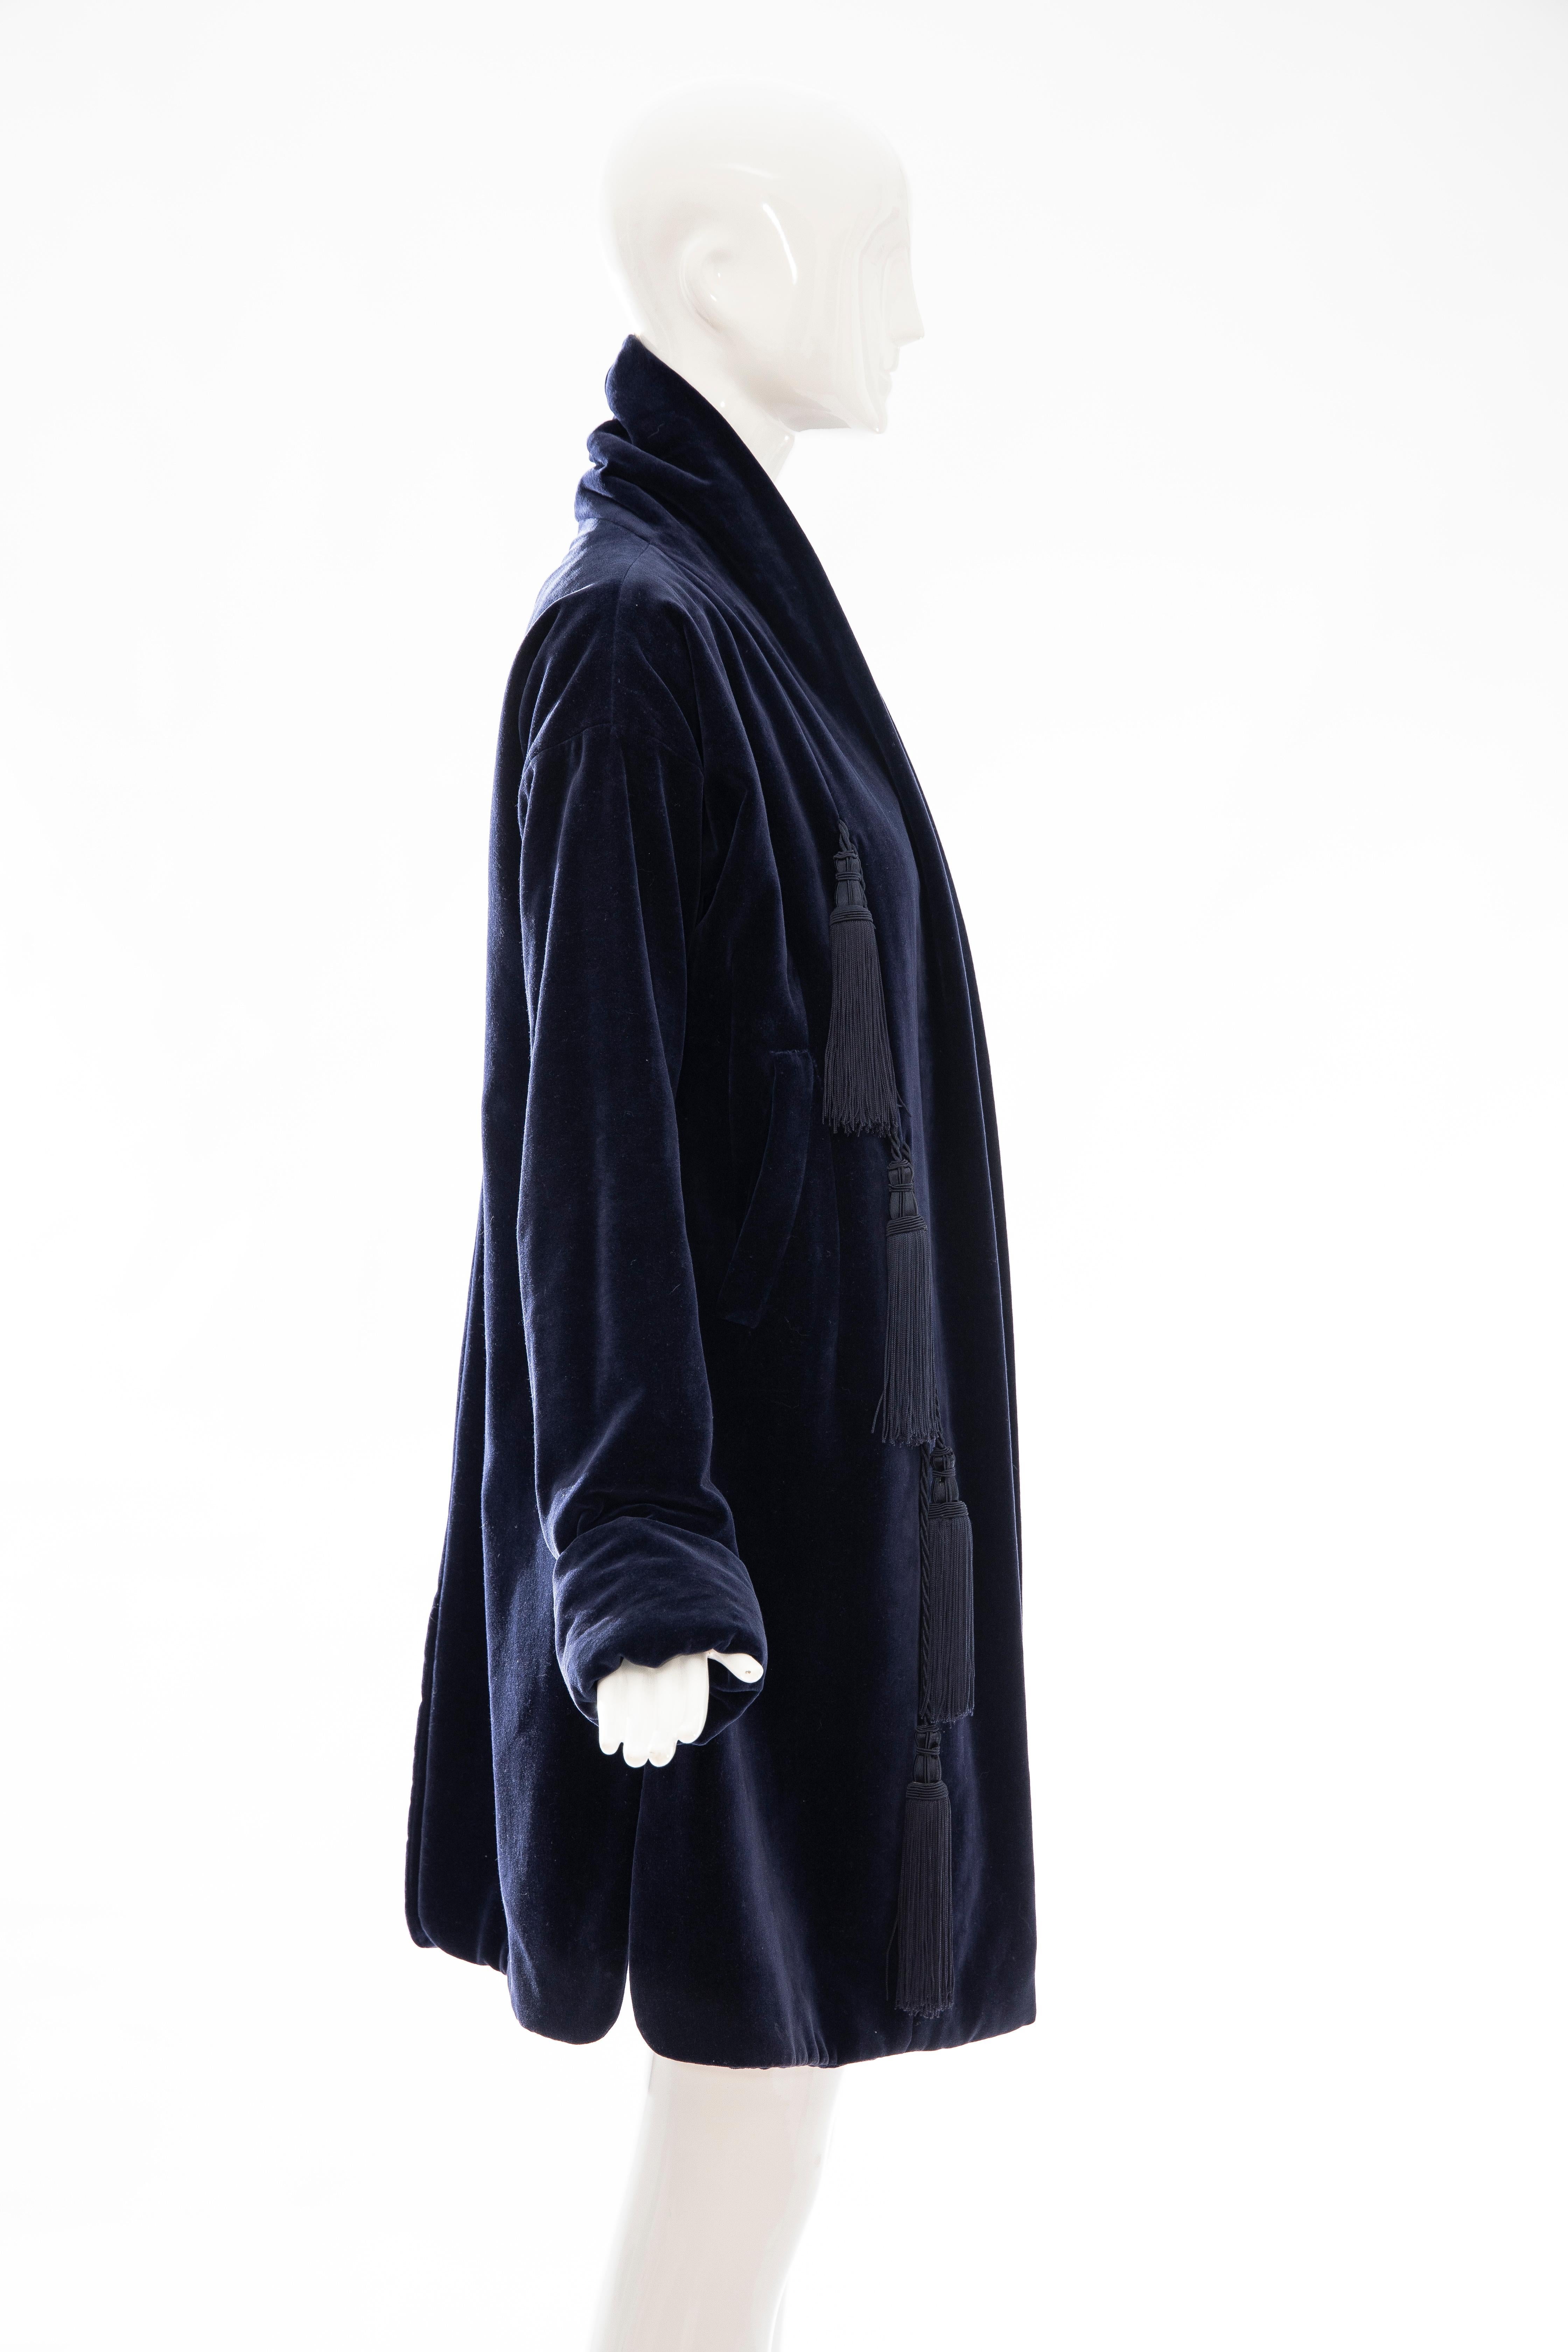 Black Romeo Gigli Navy Blue Cotton Velvet Appliquéd Tassels Kimono Jacket, Fall 1994 For Sale